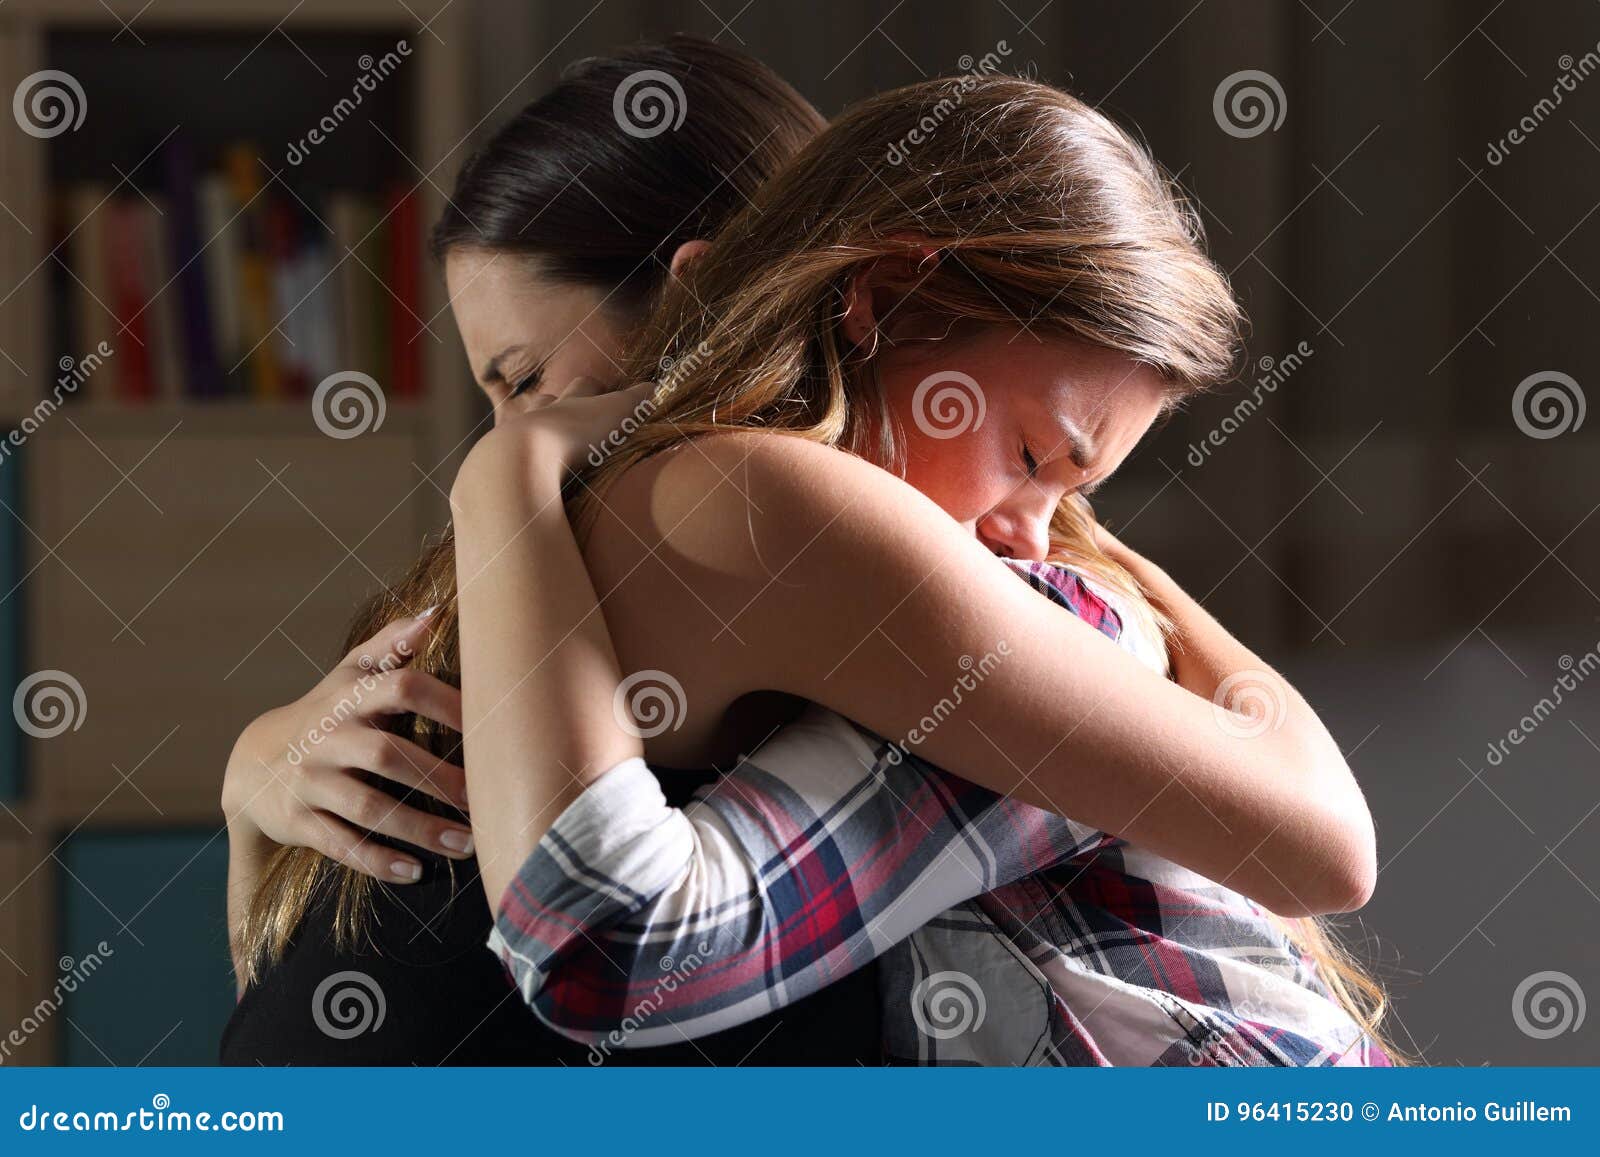 two sad teens embracing at bedroom